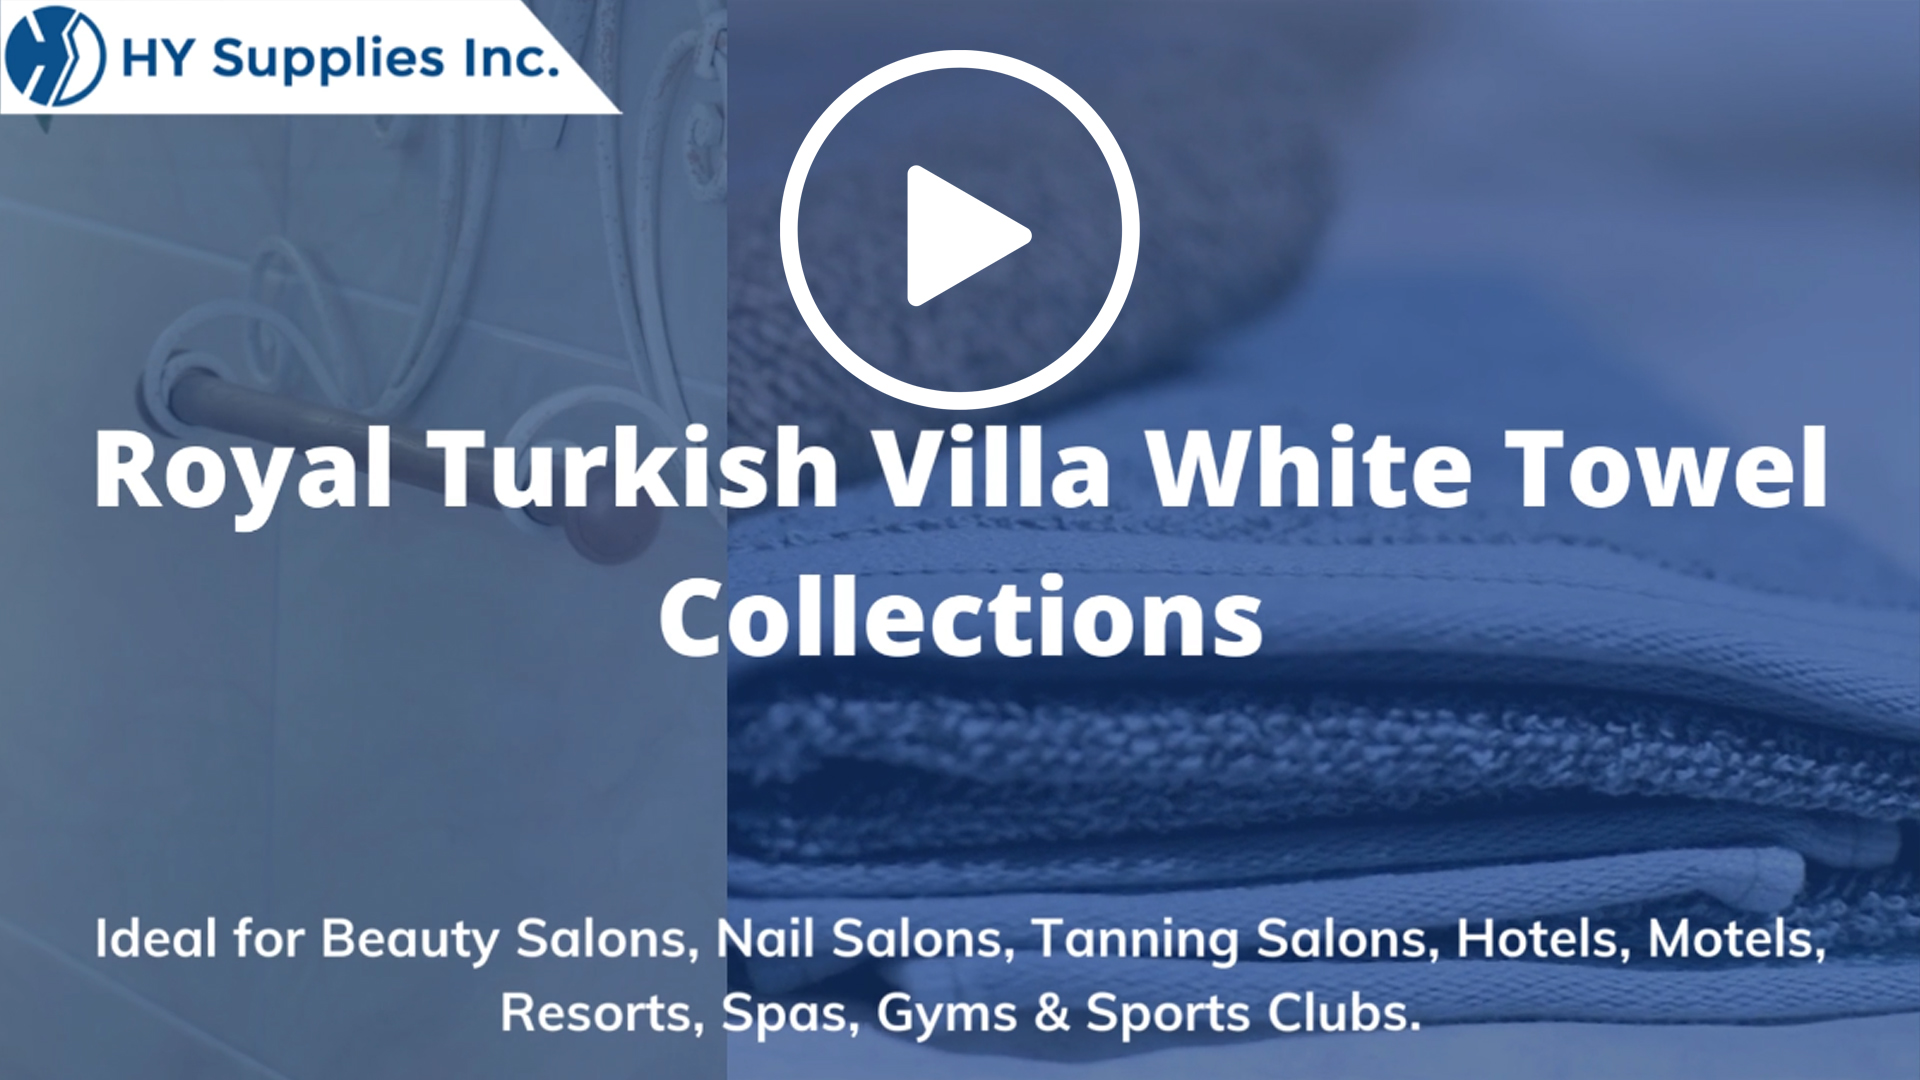 Royal Turkish Villa White Towel Collections Product Description